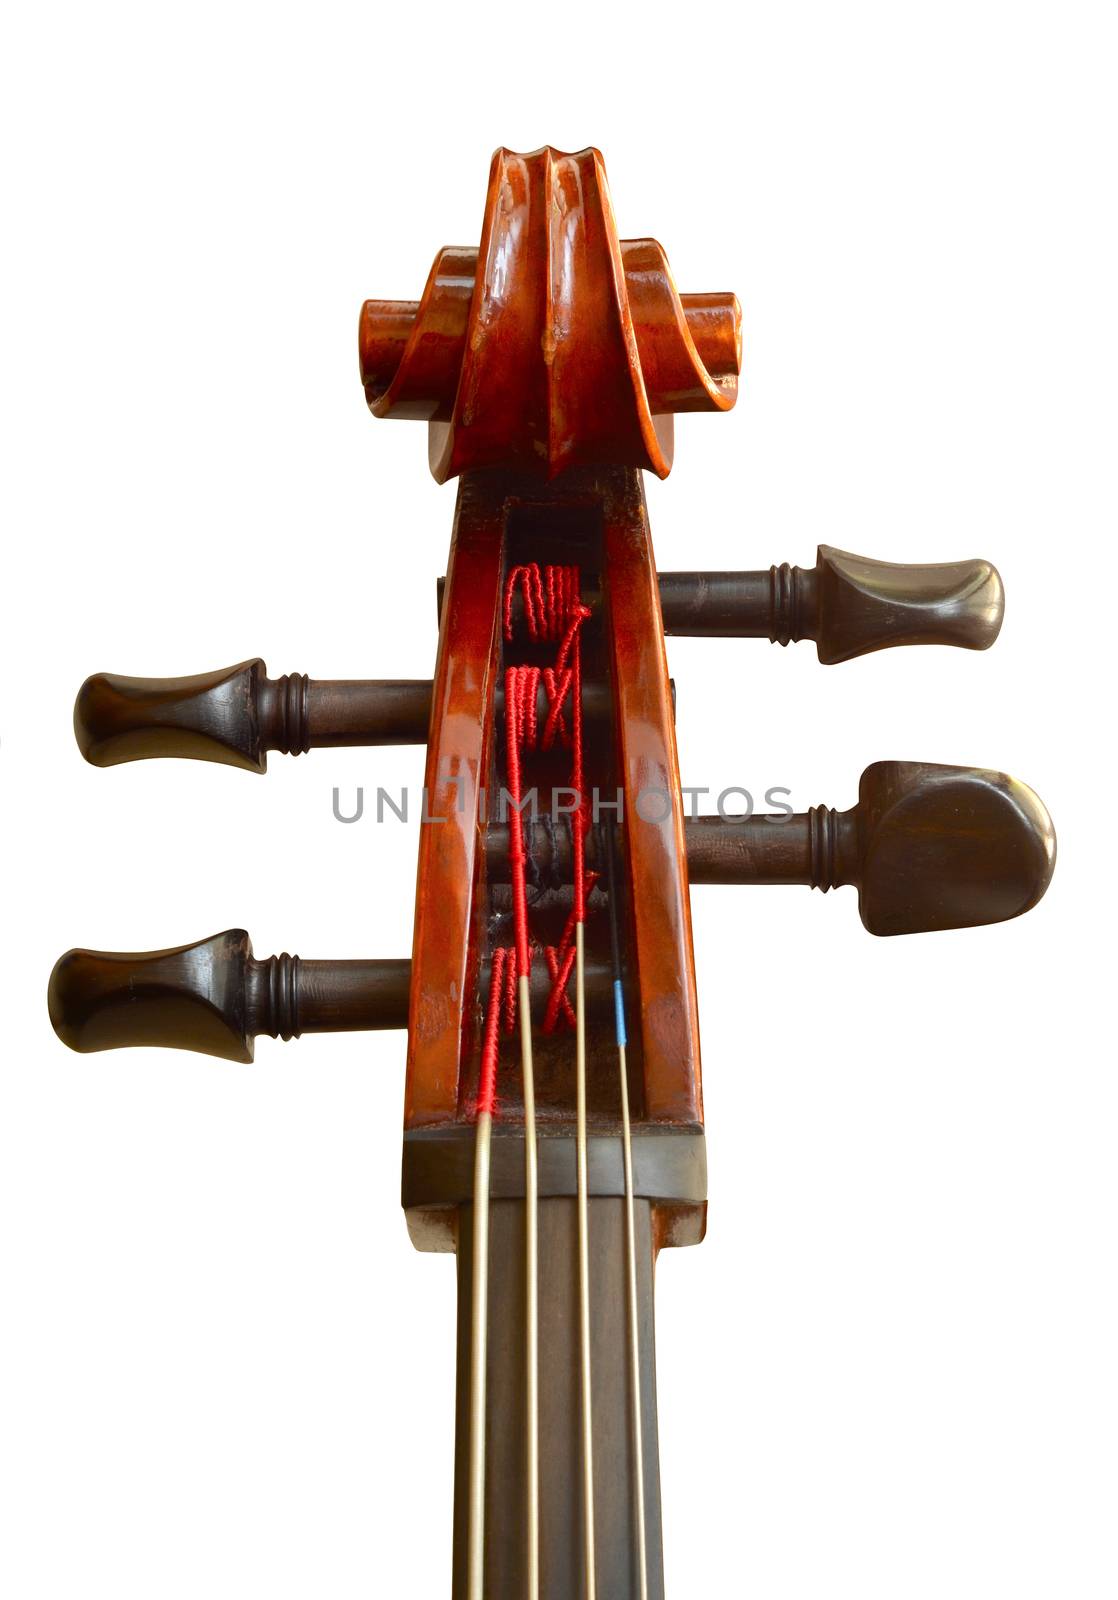 Cello Head by mrdoomits